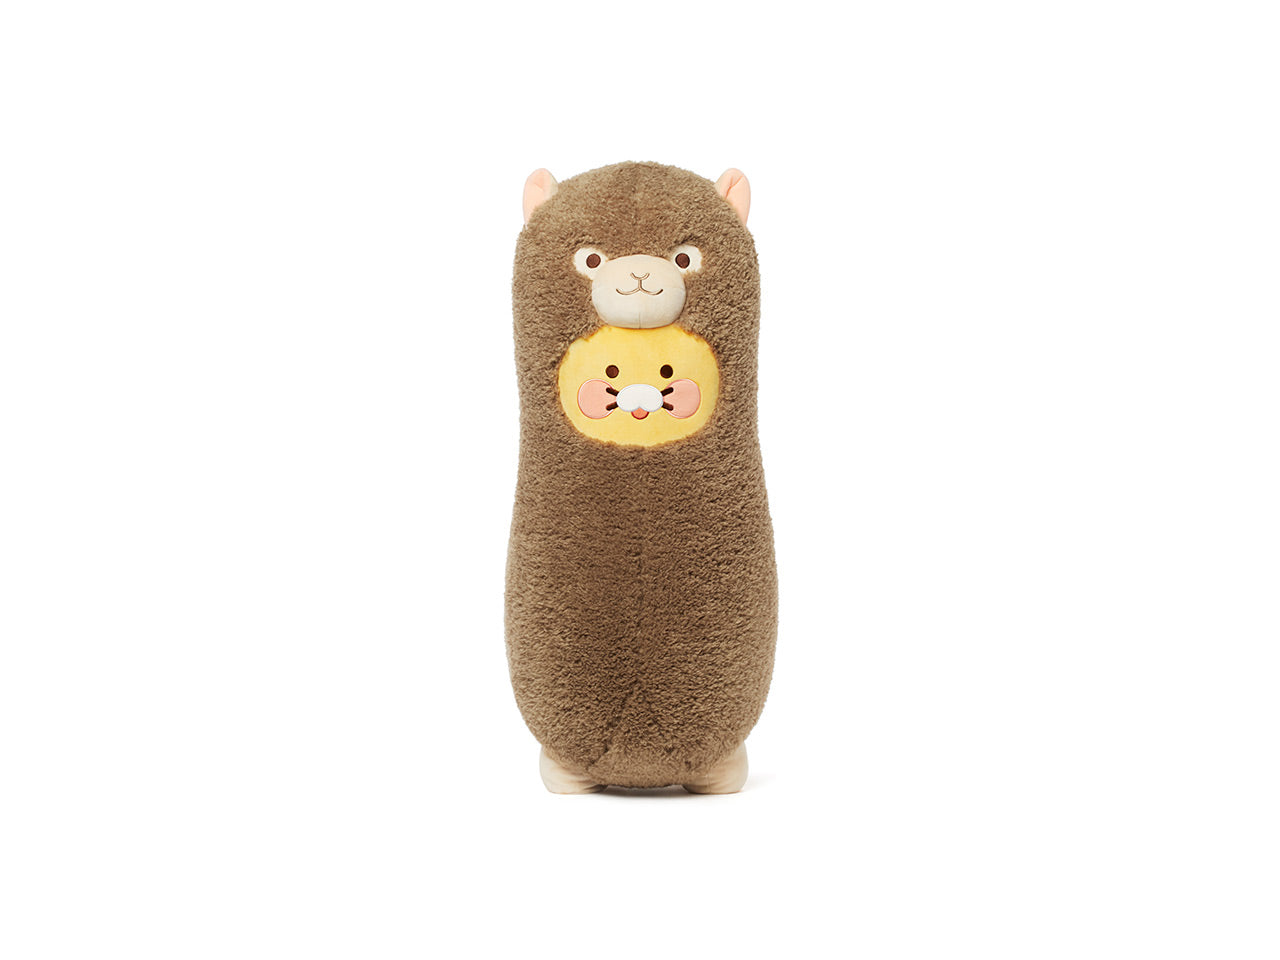 kakao friends choonsik in alpaca costume body pillow front